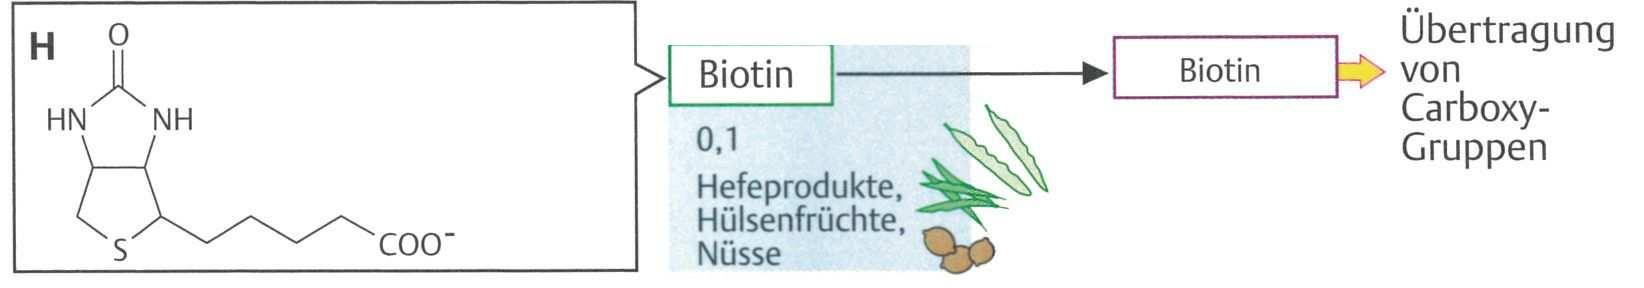 51 Biotin